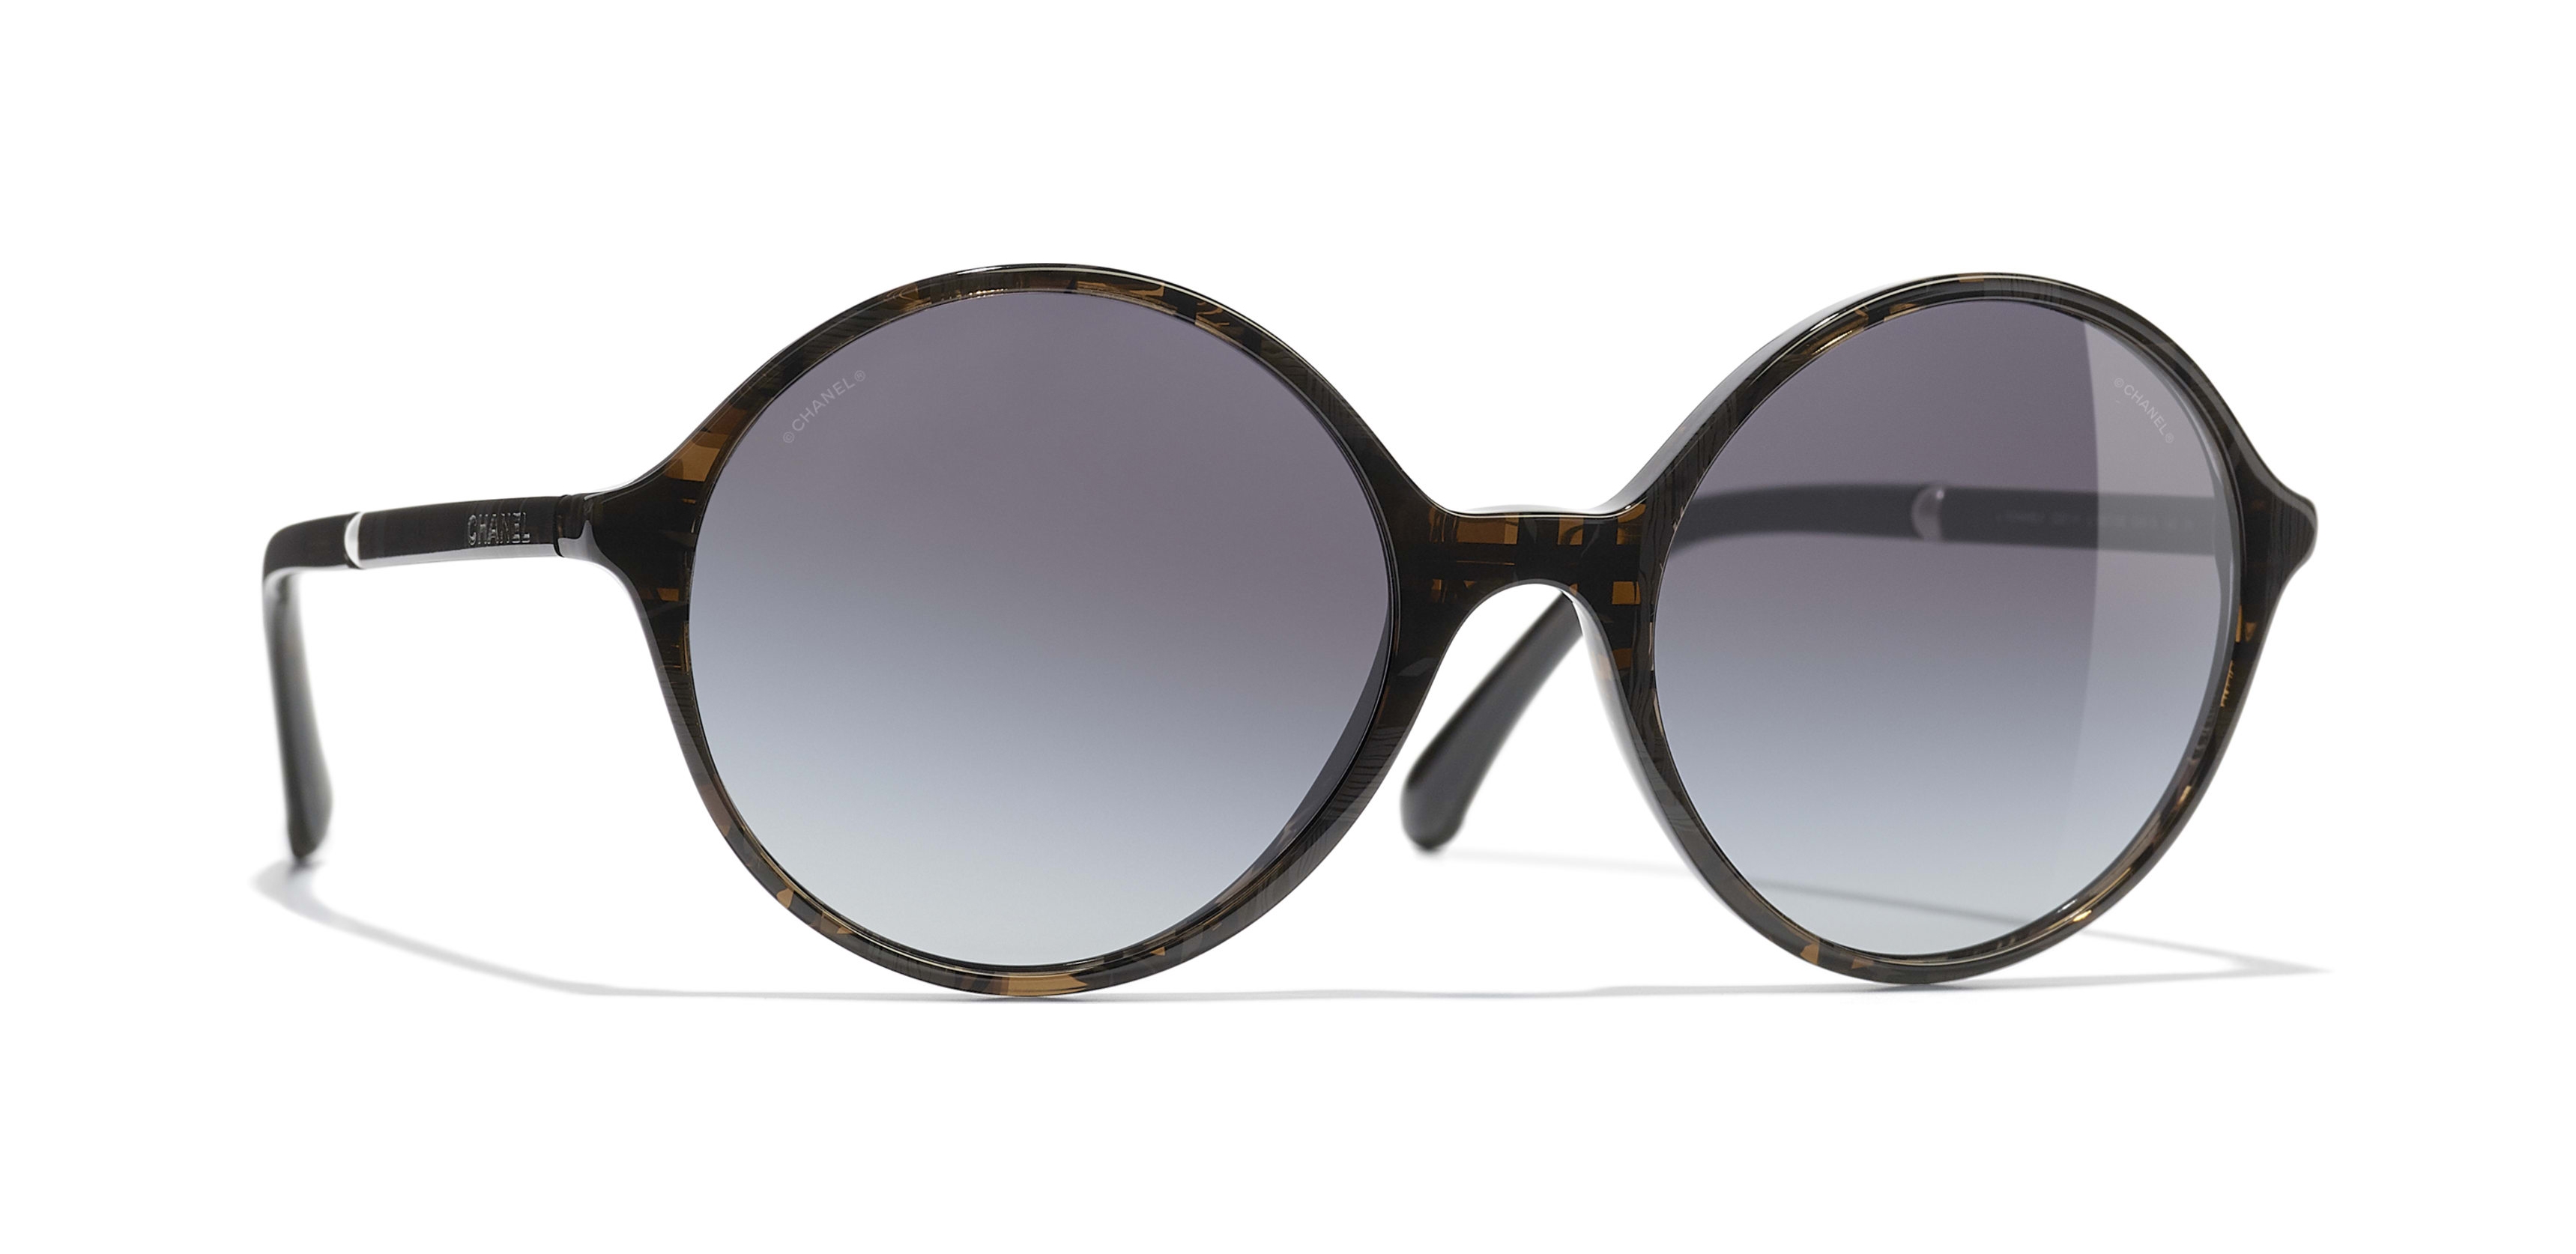 Chanel - Round Sunglasses - Dark Brown Gray - Chanel Eyewear